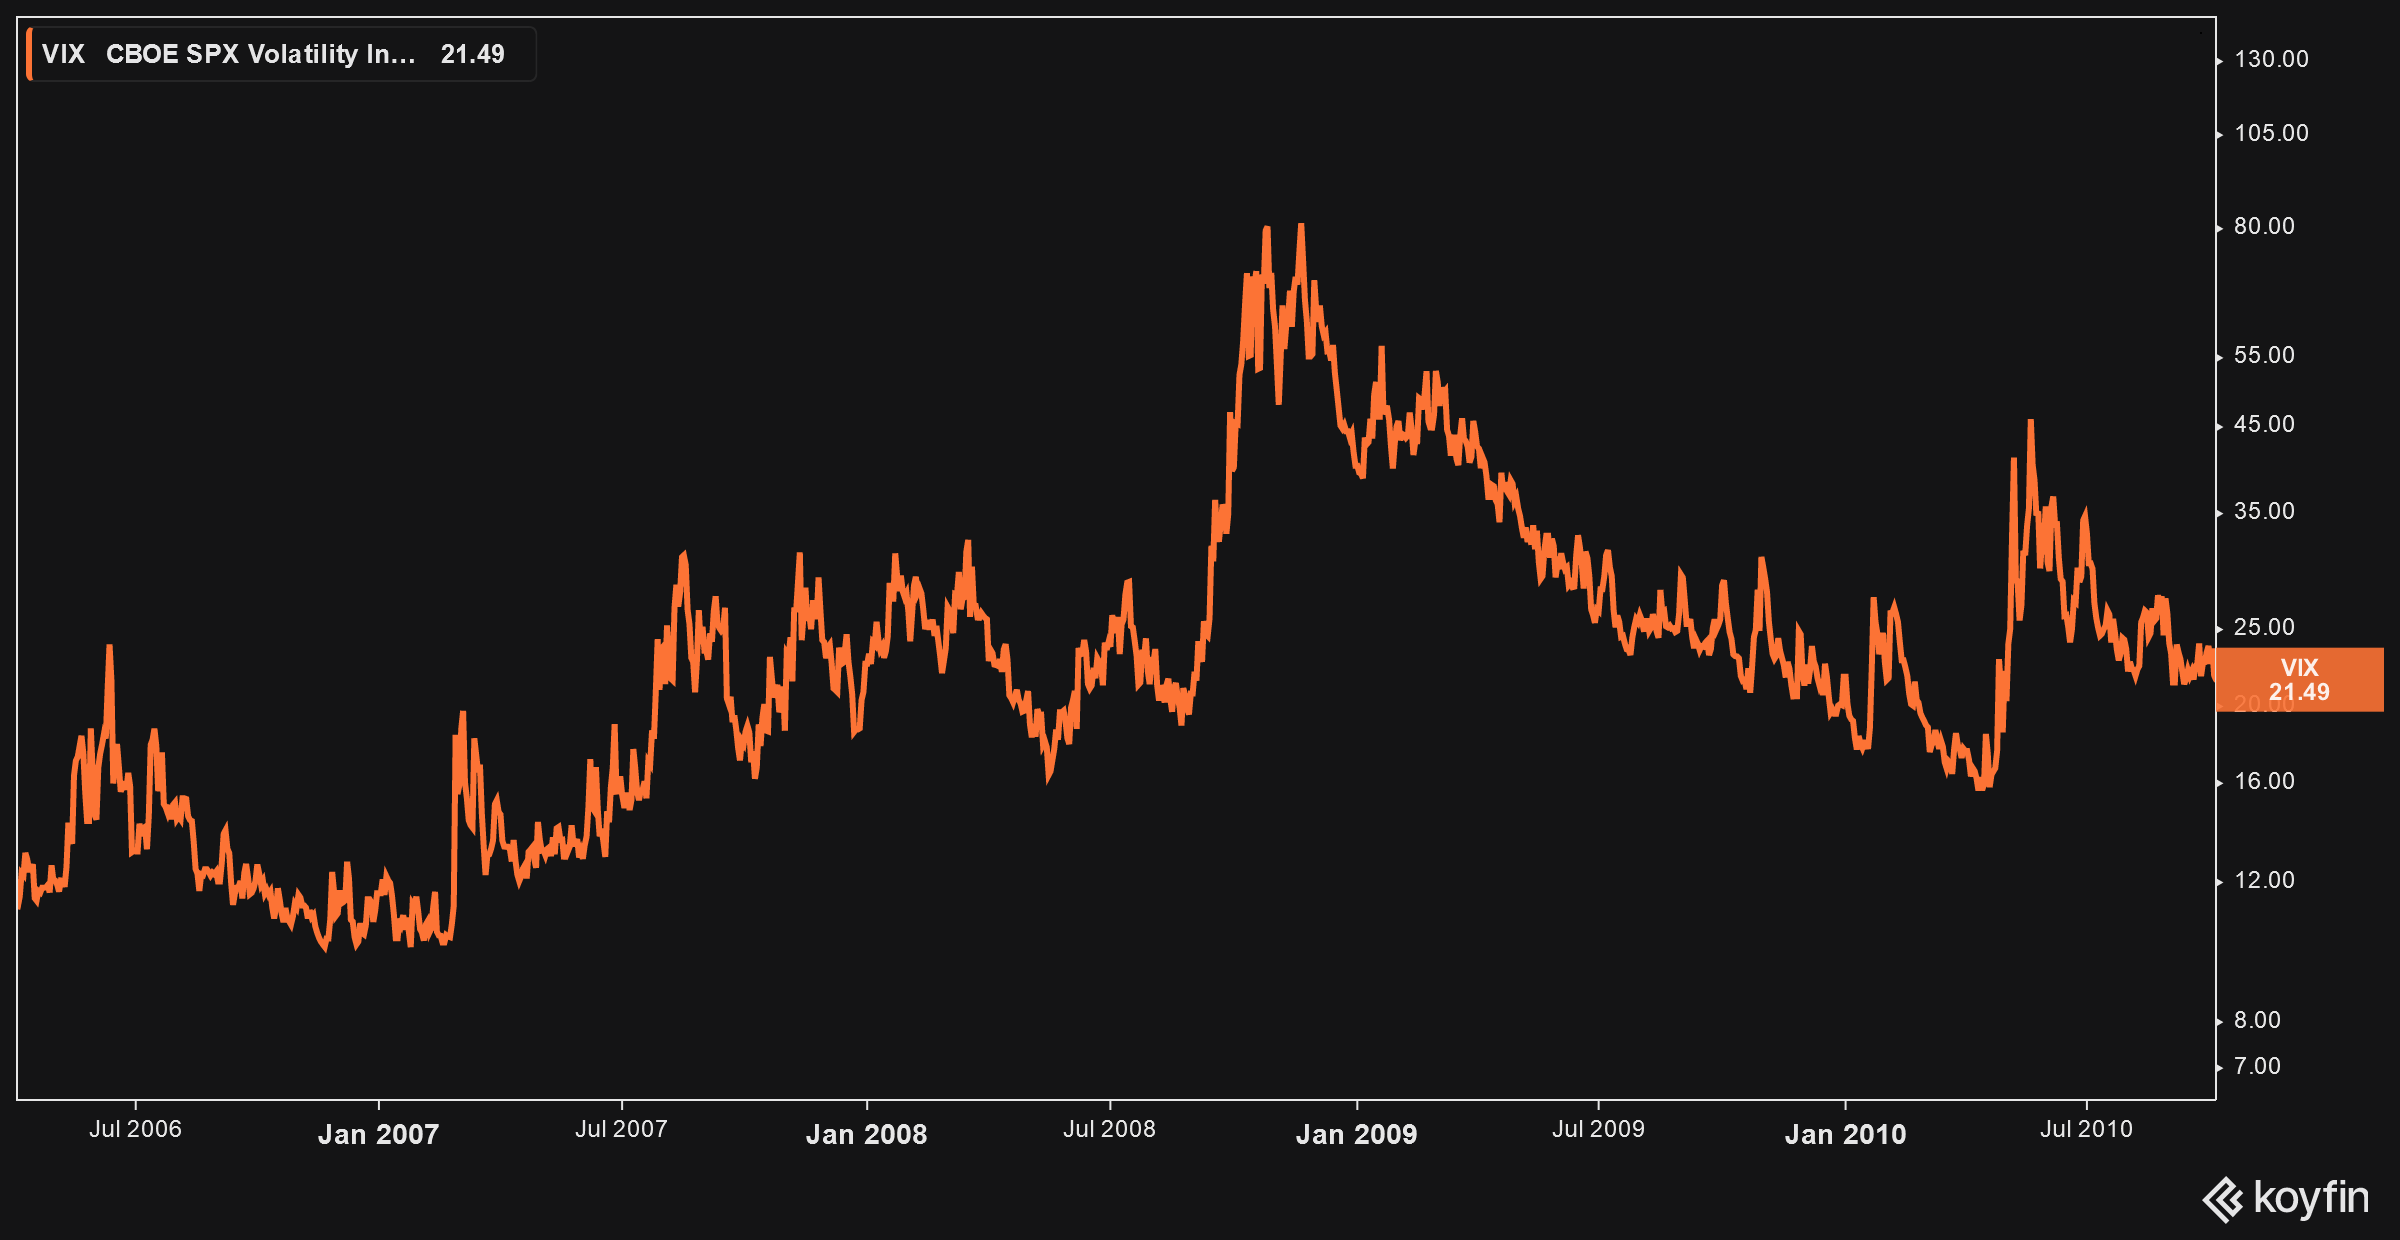 Chart of 2008 stock market volatility